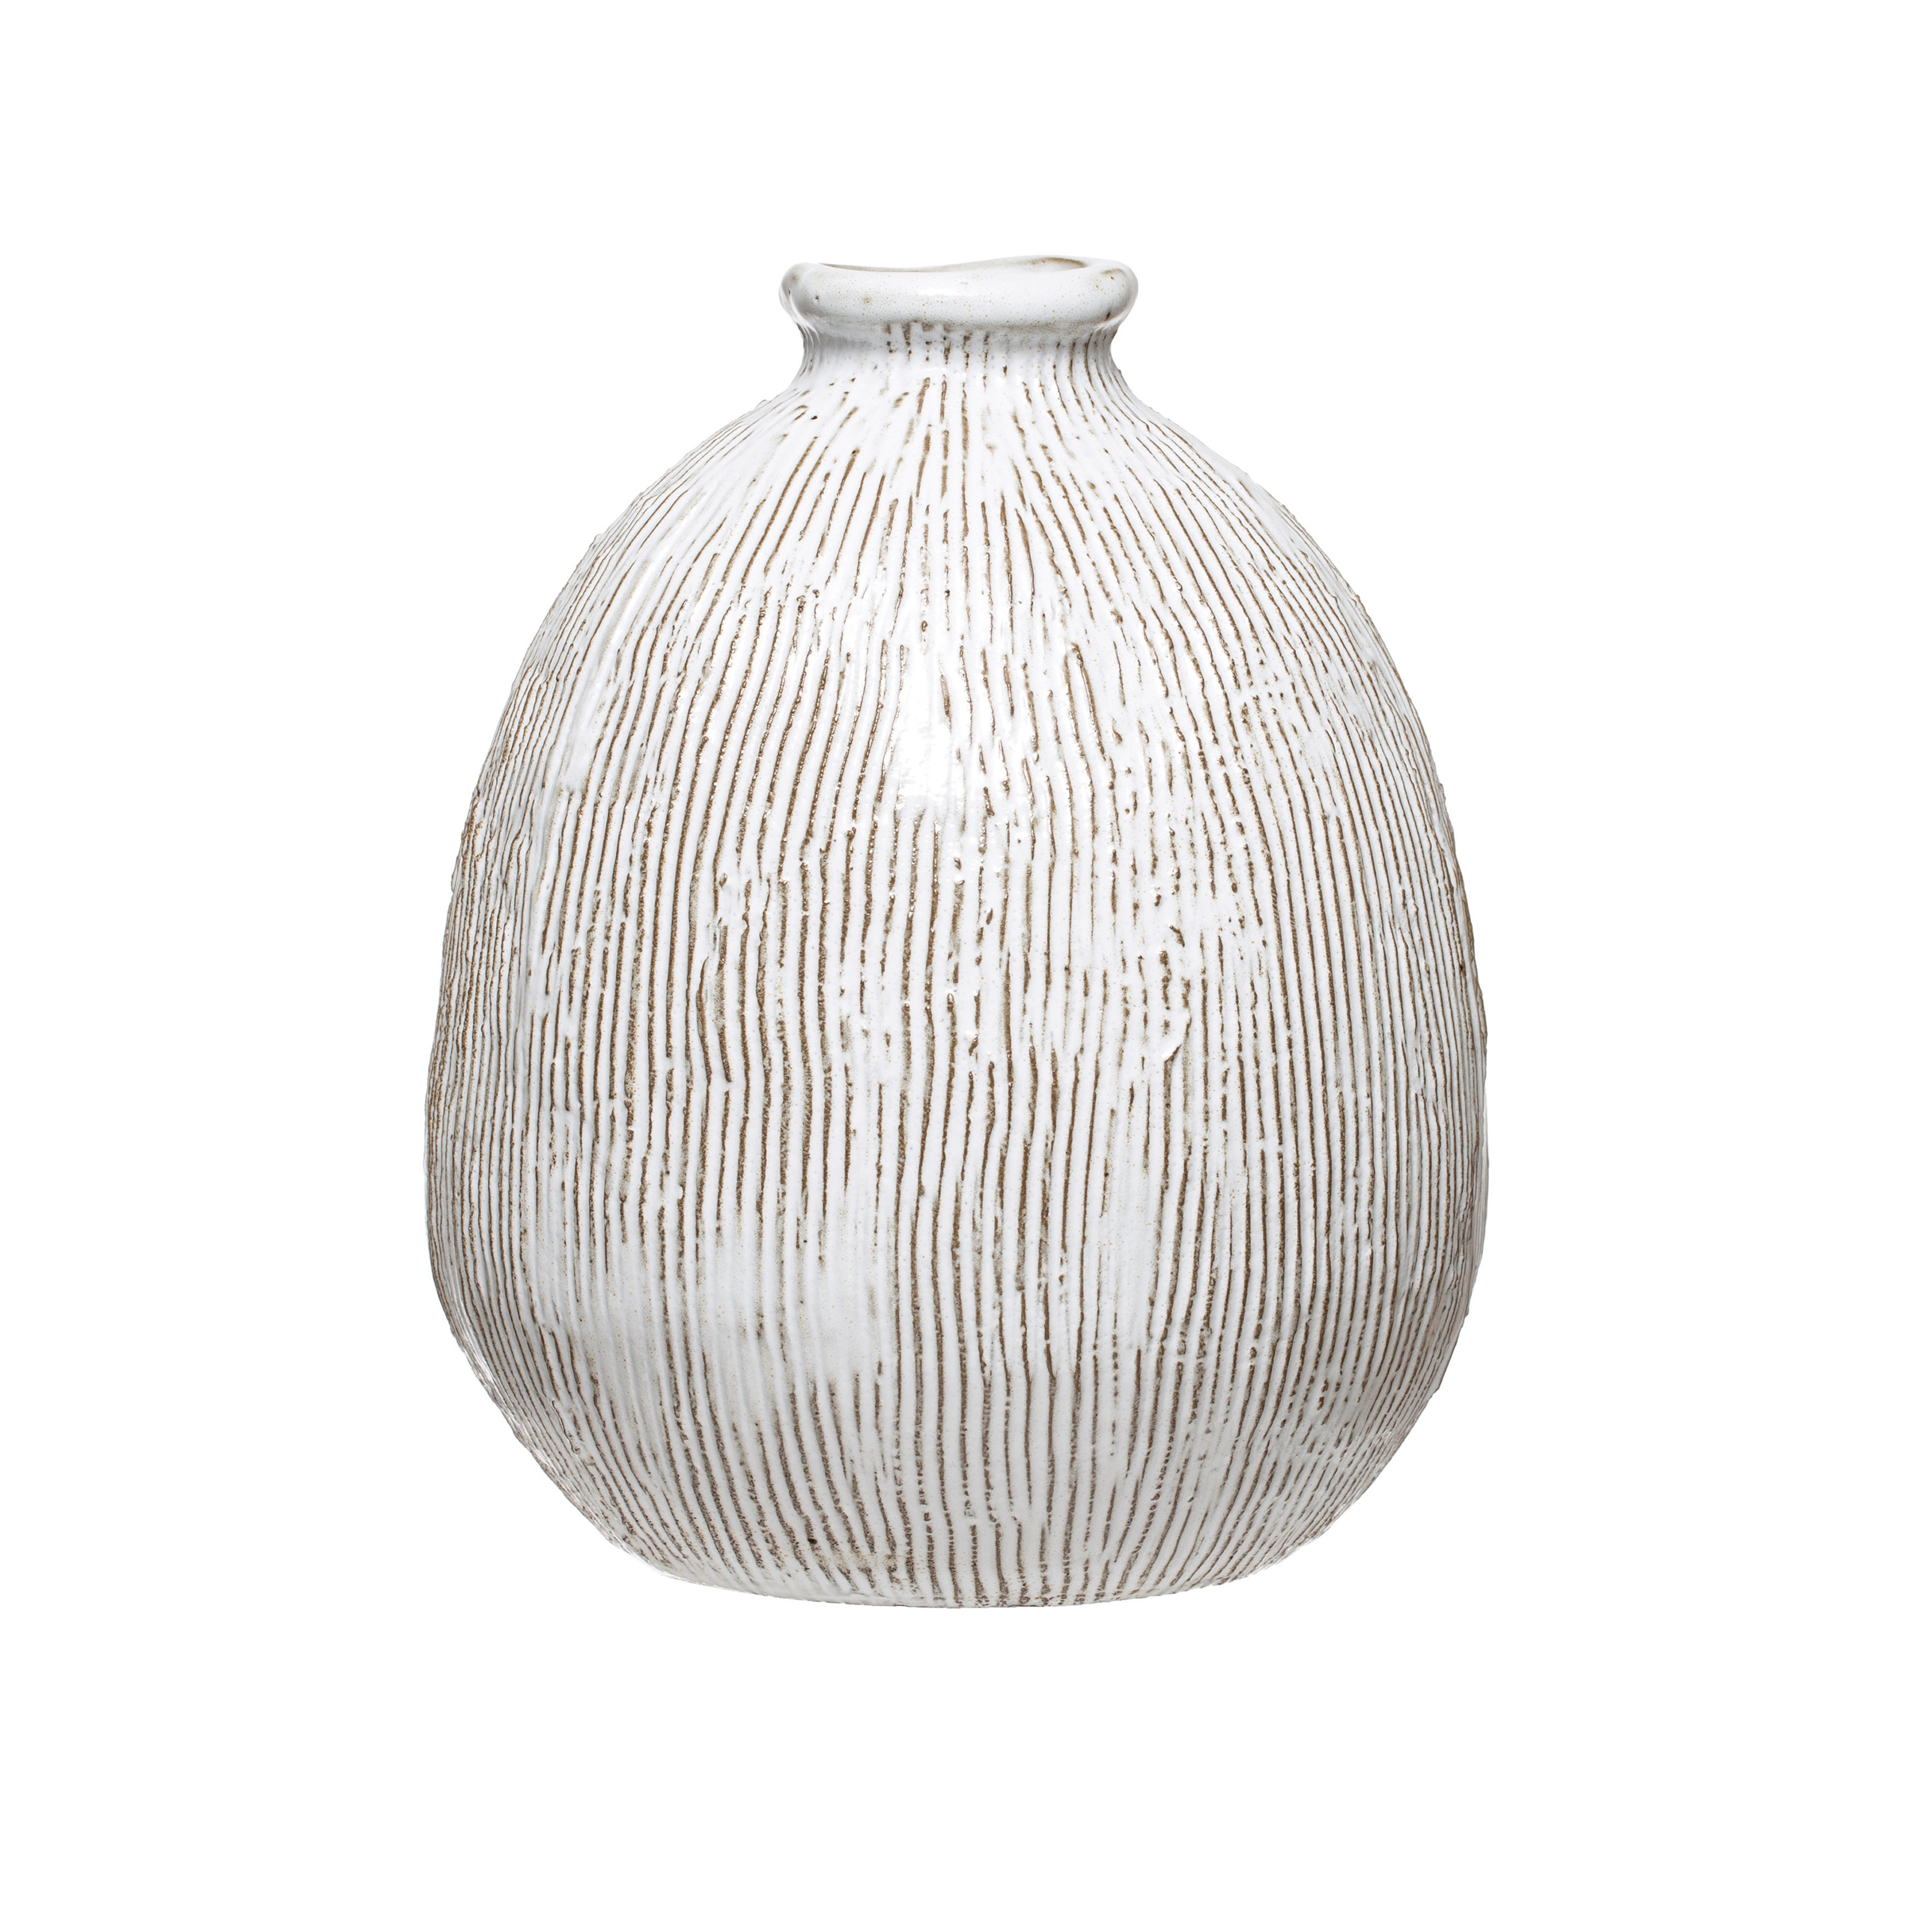 Terra cotta Vase, White - Image 0